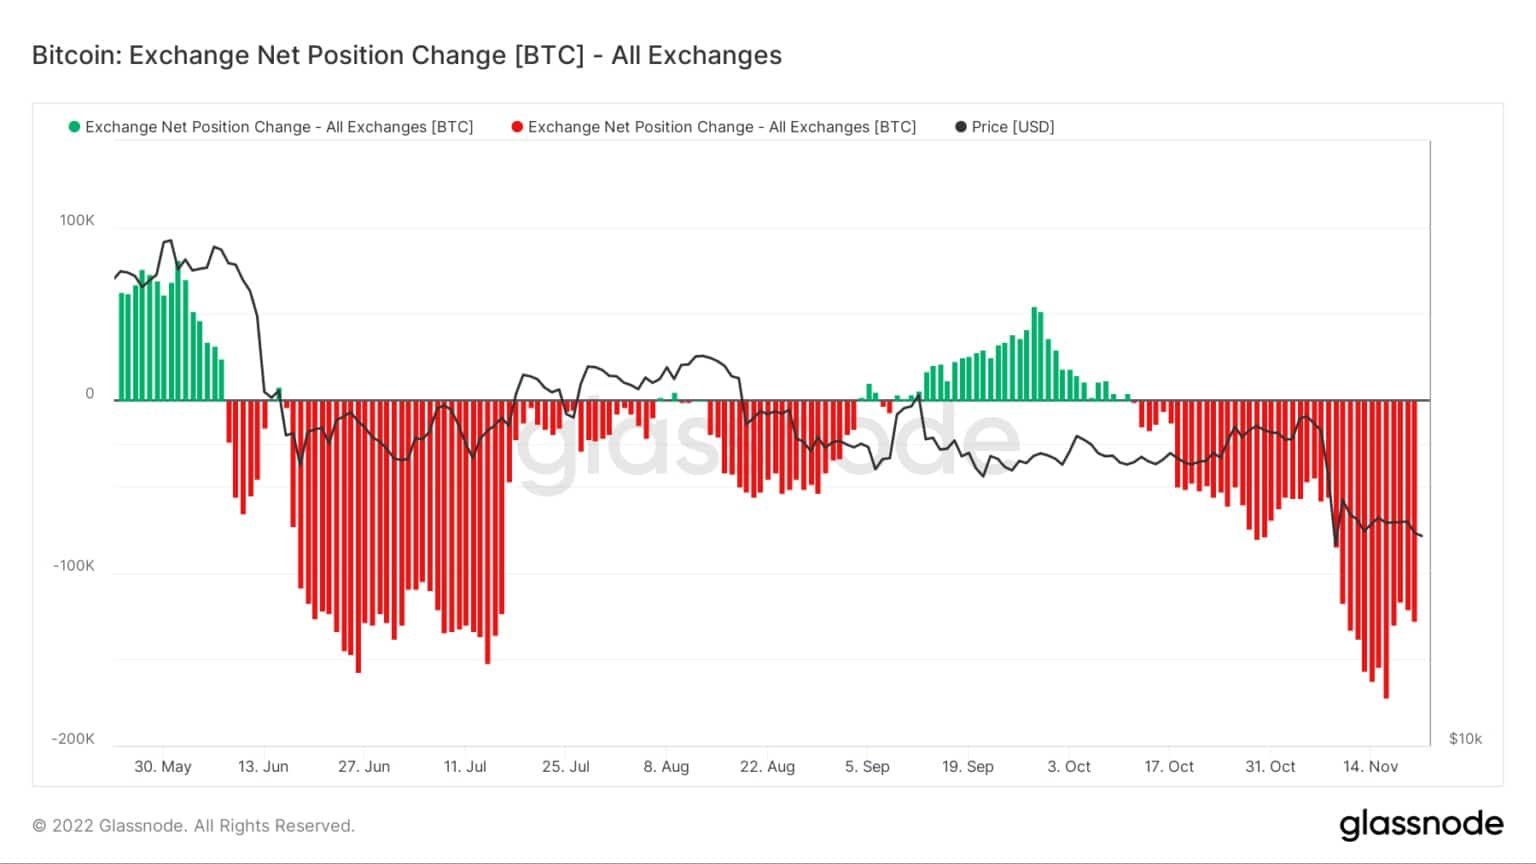 Bitcoin : Exchange Net Position Change - All Exchanges (Source : Glassnode)